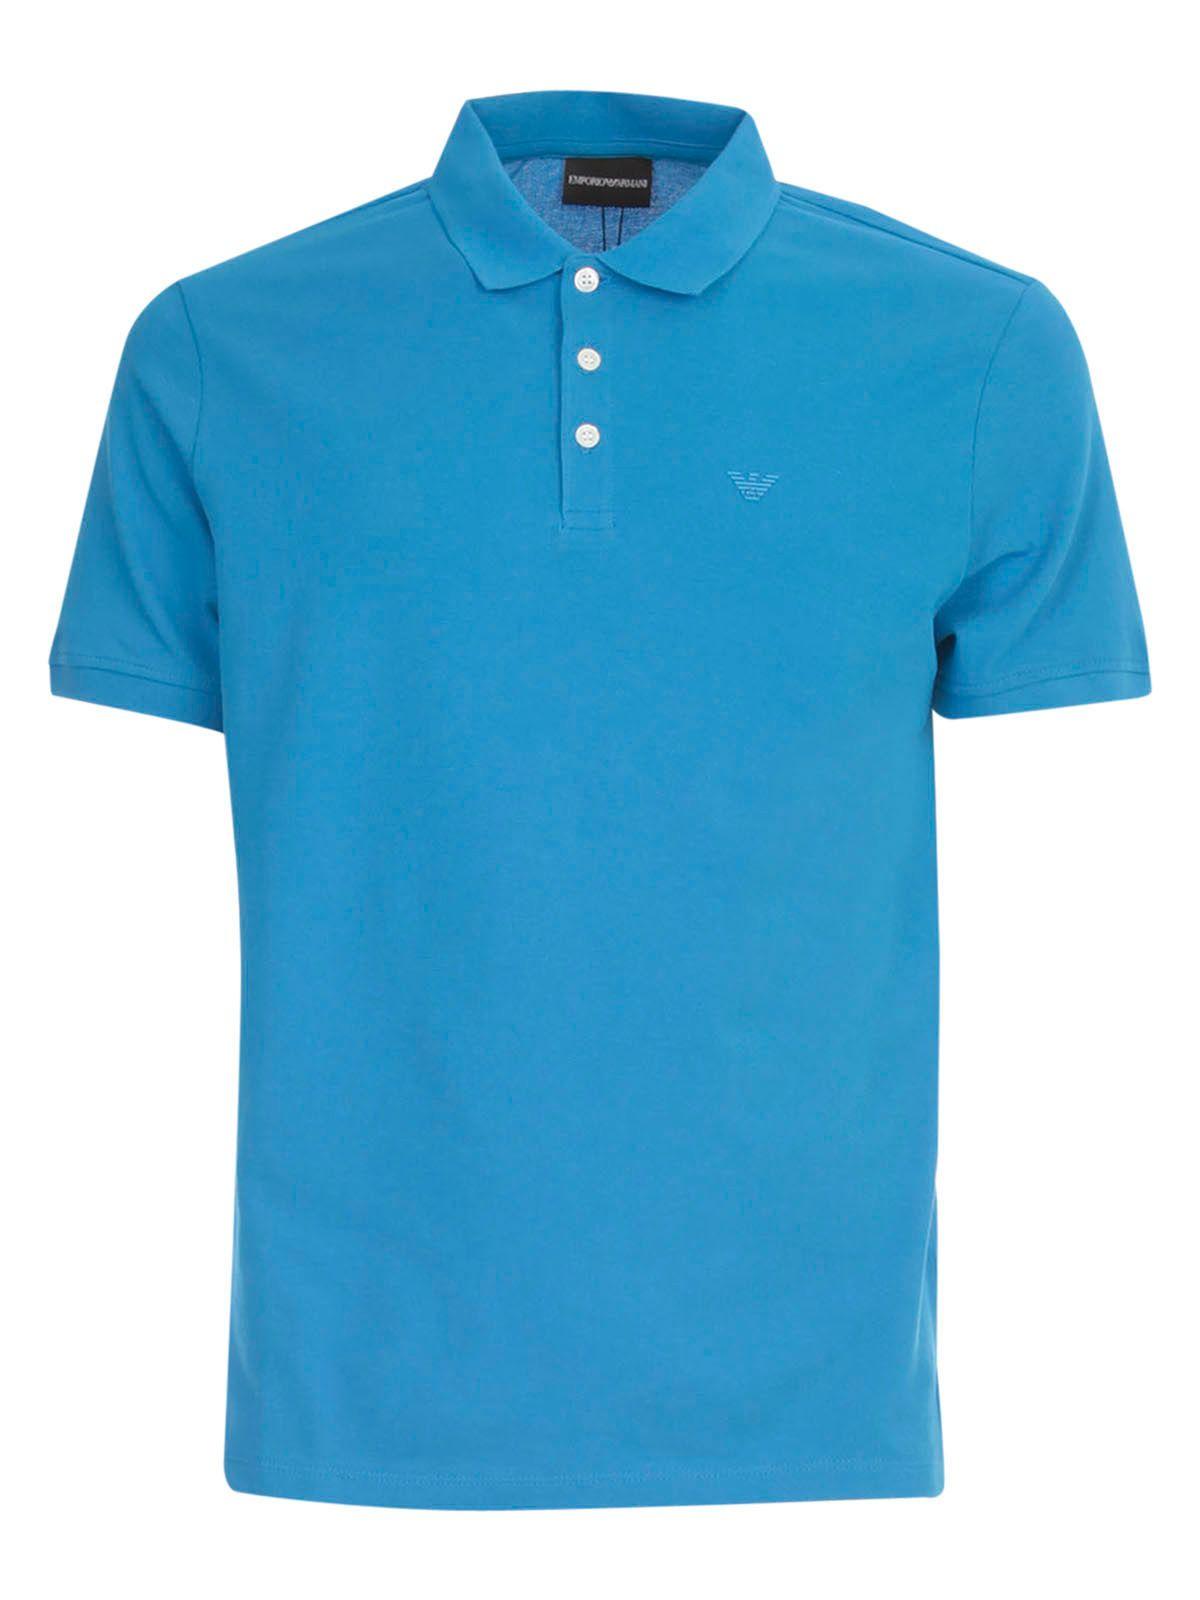 Emporio Armani Light Blue Cotton Polo Shirt for Men - Lyst